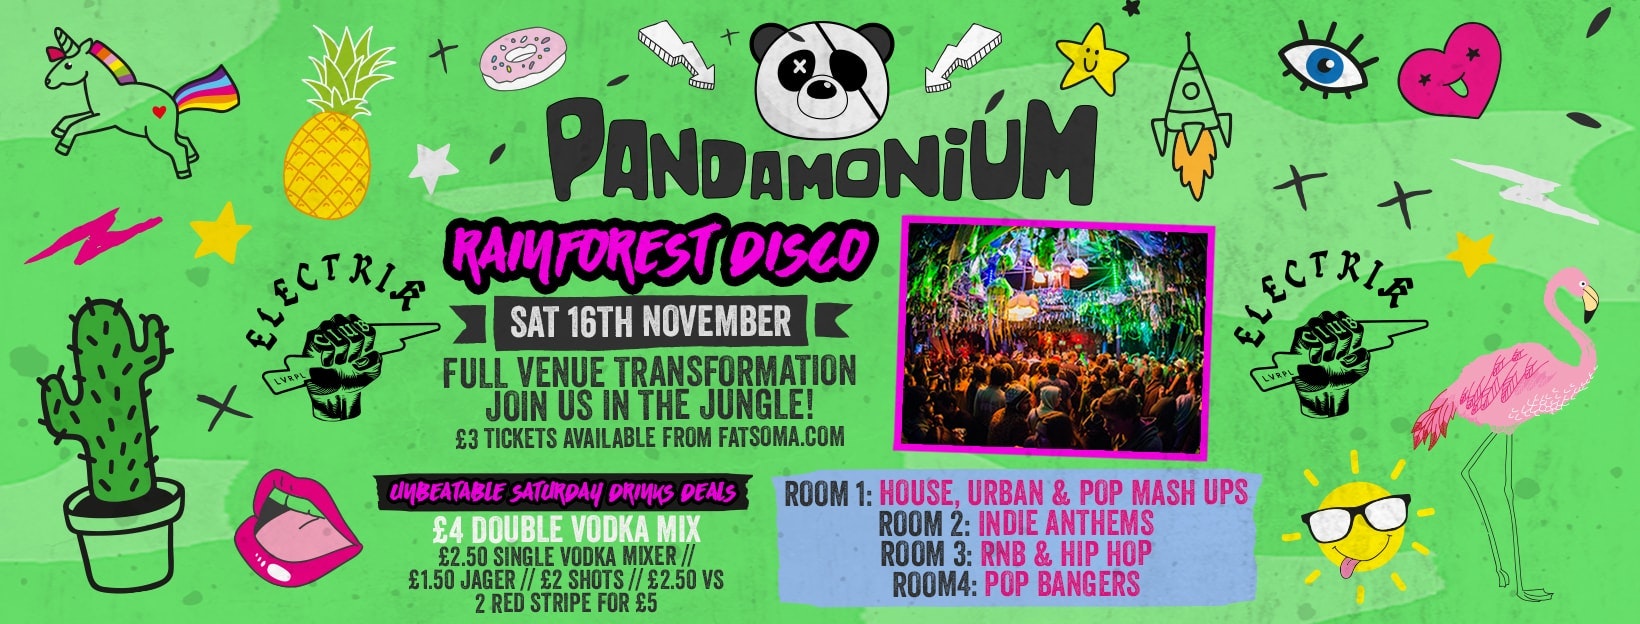 Pandamonium Saturdays – The Rainforest Disco!